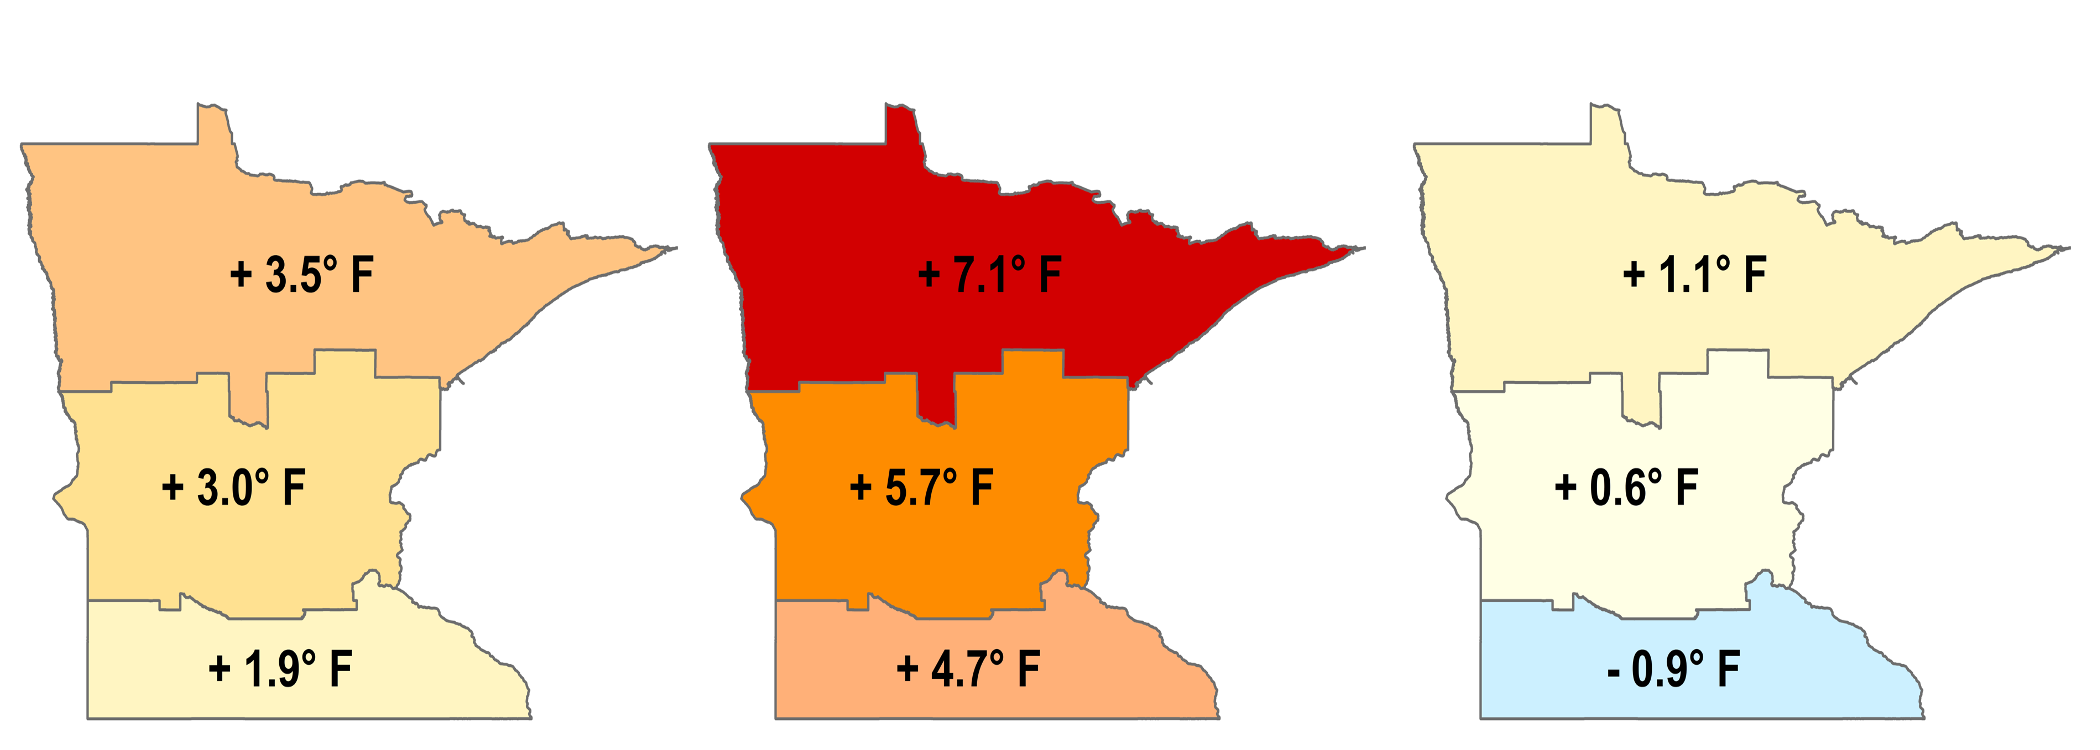 St. Paul, Minnesota Climate Change Risks and Hazards: Heat